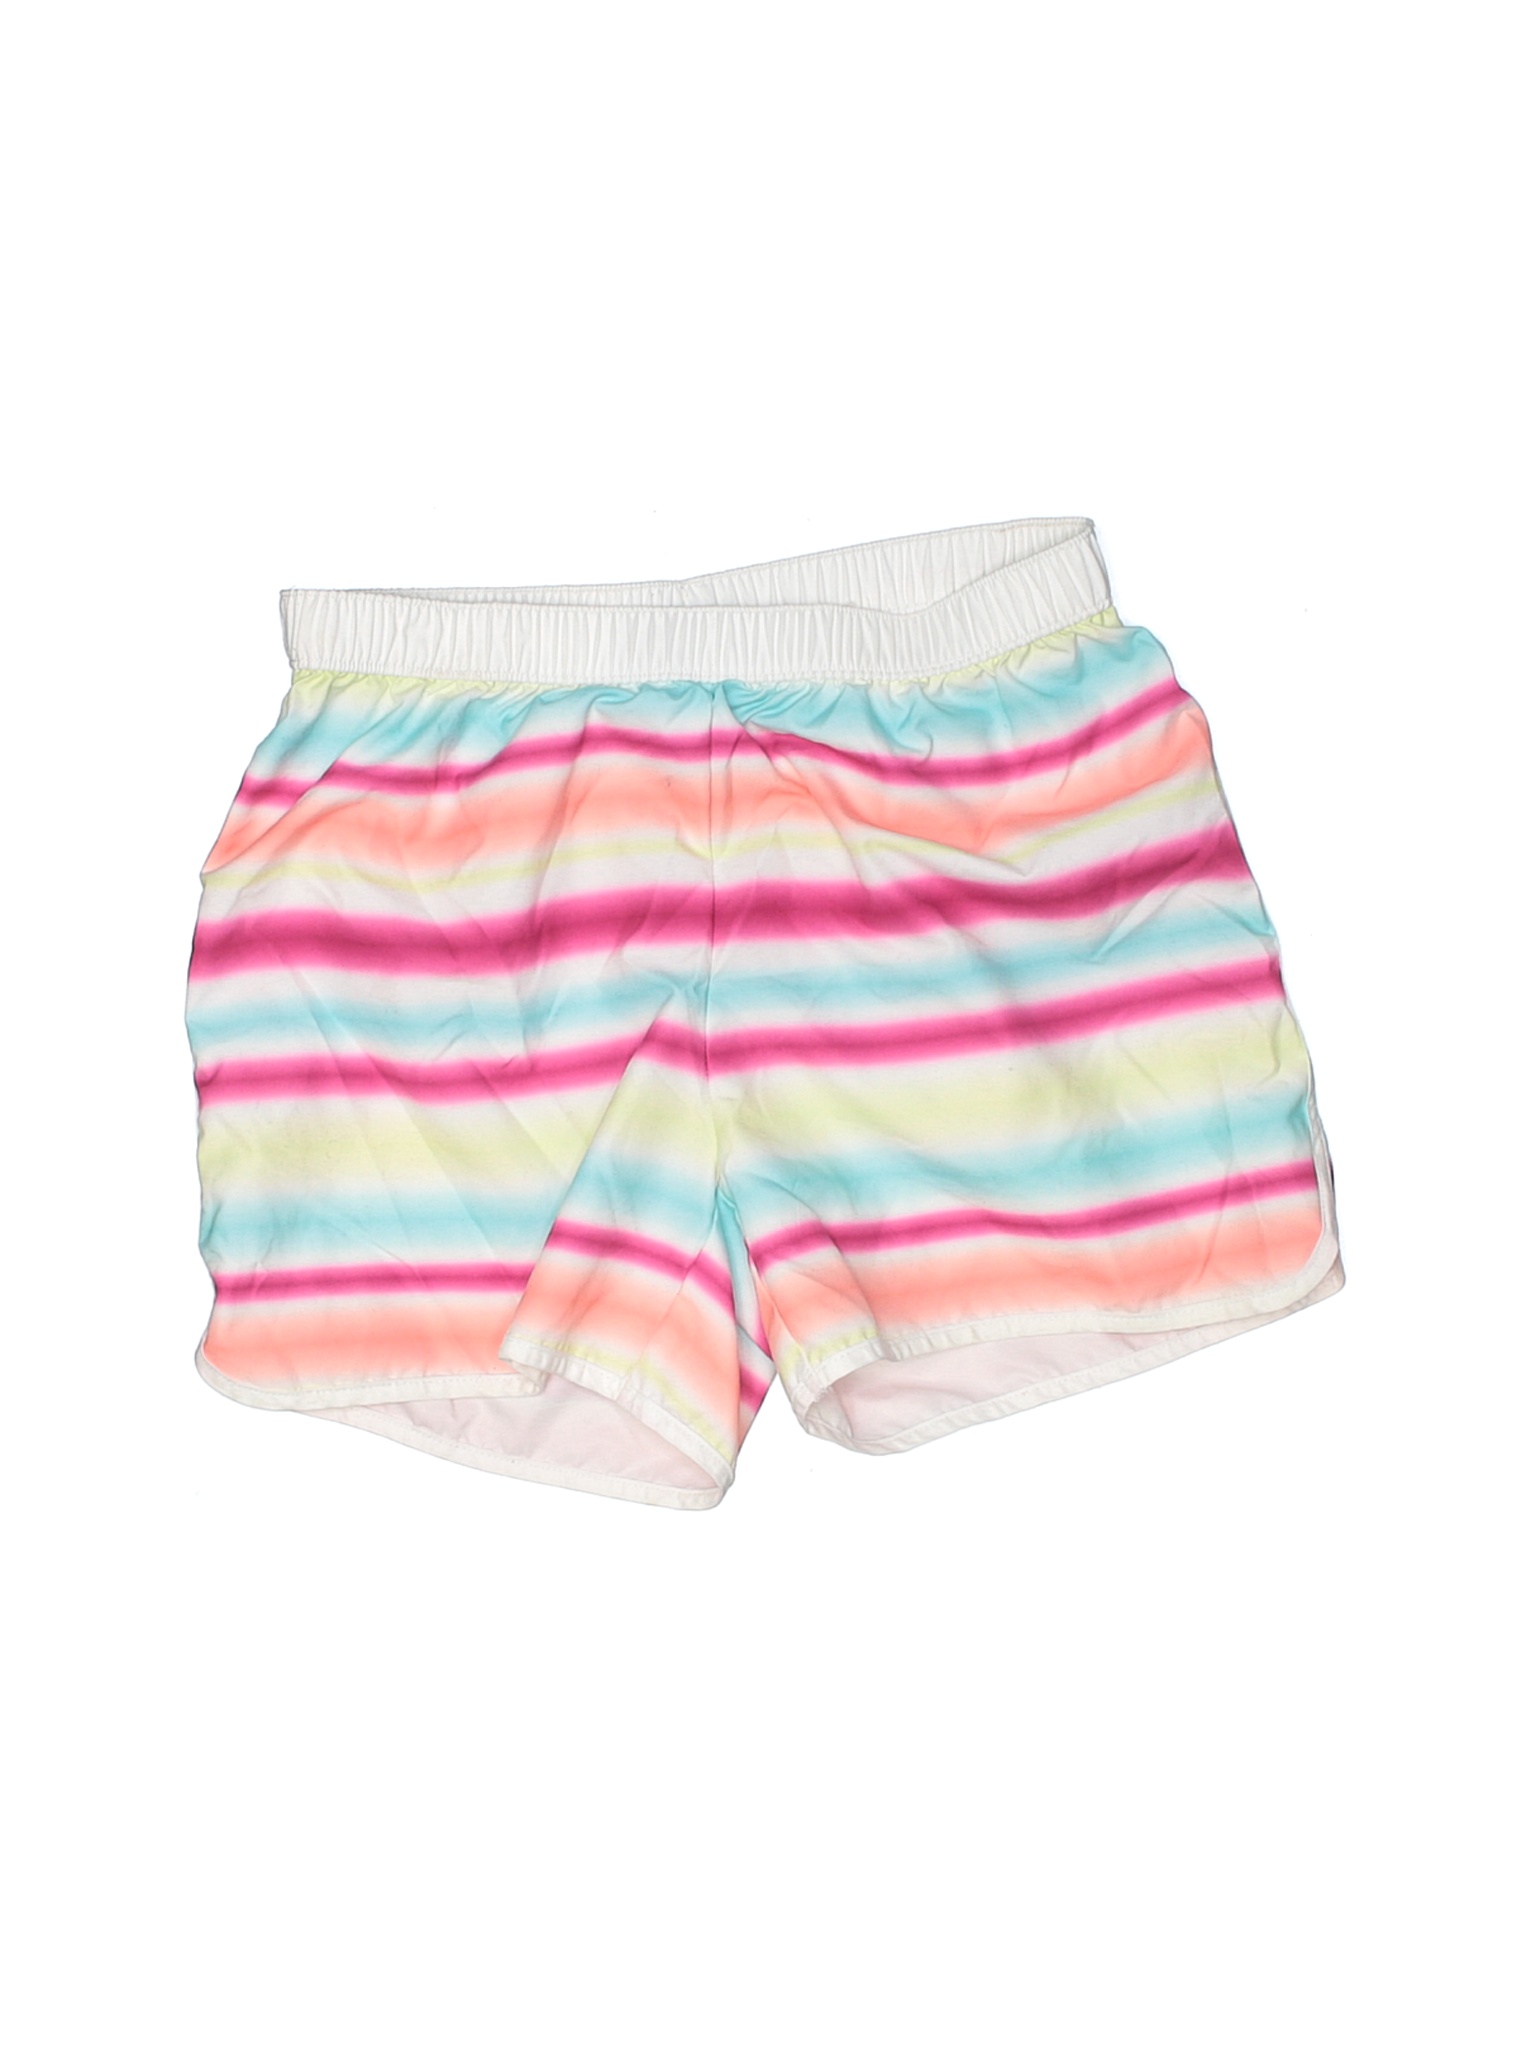 Lands' End Women Pink Board Shorts XL | eBay